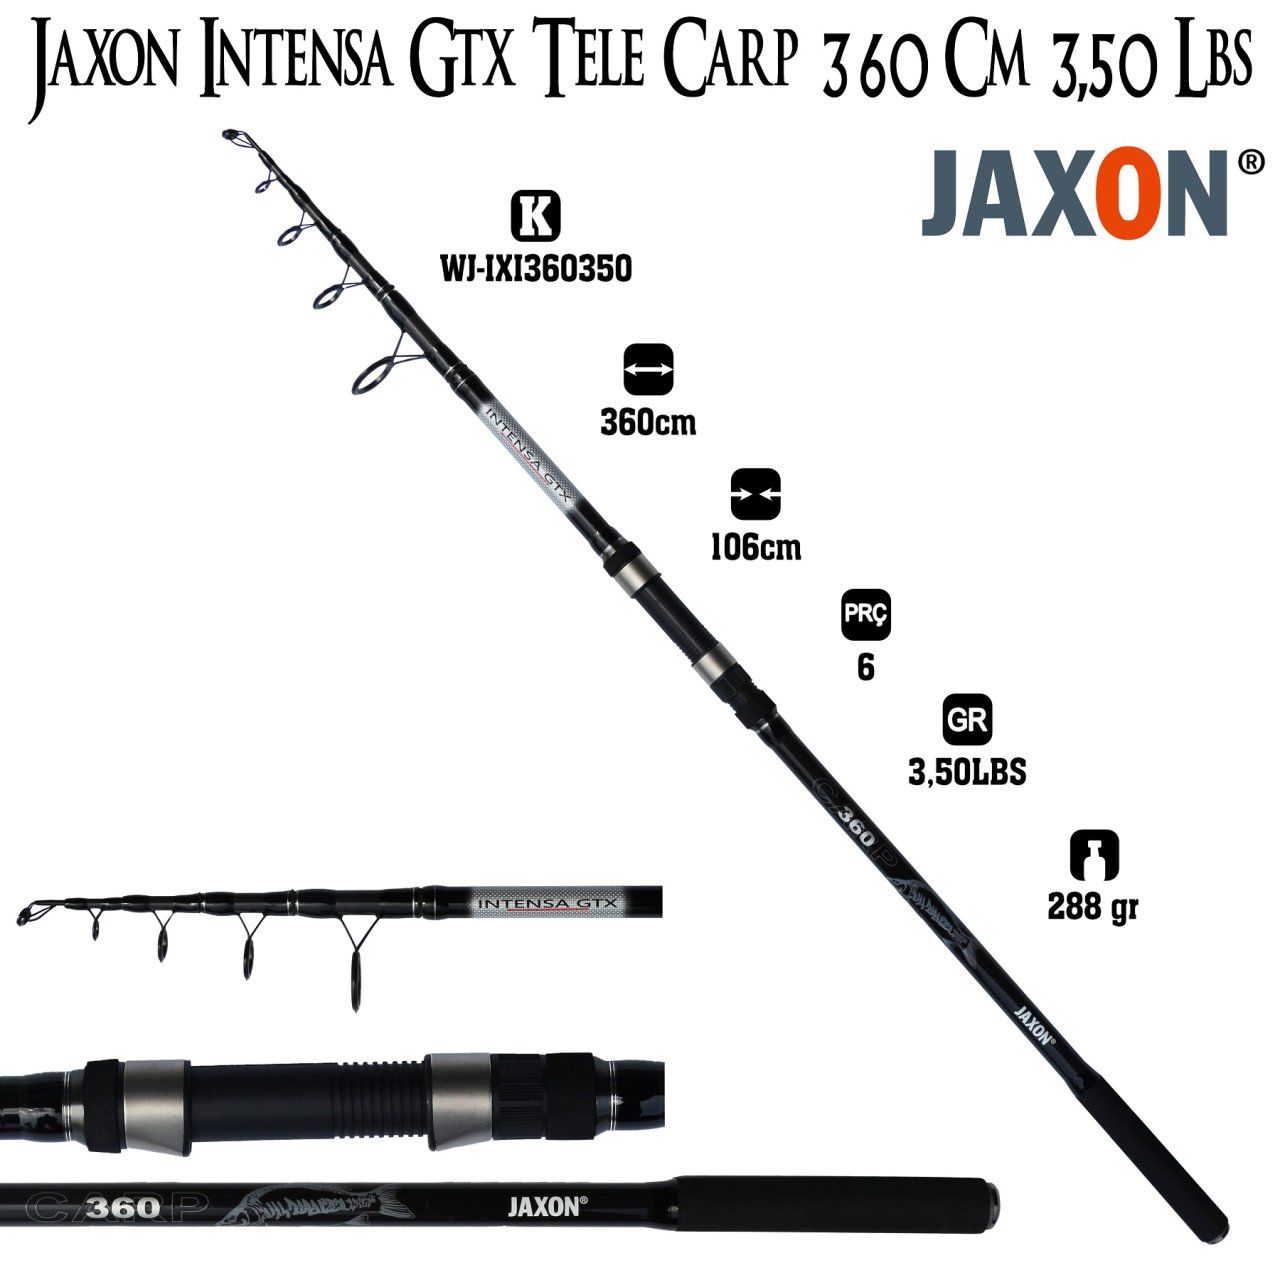 Jaxon Intensa Gtx Tele Carp 360 Cm 3,50 Lbs